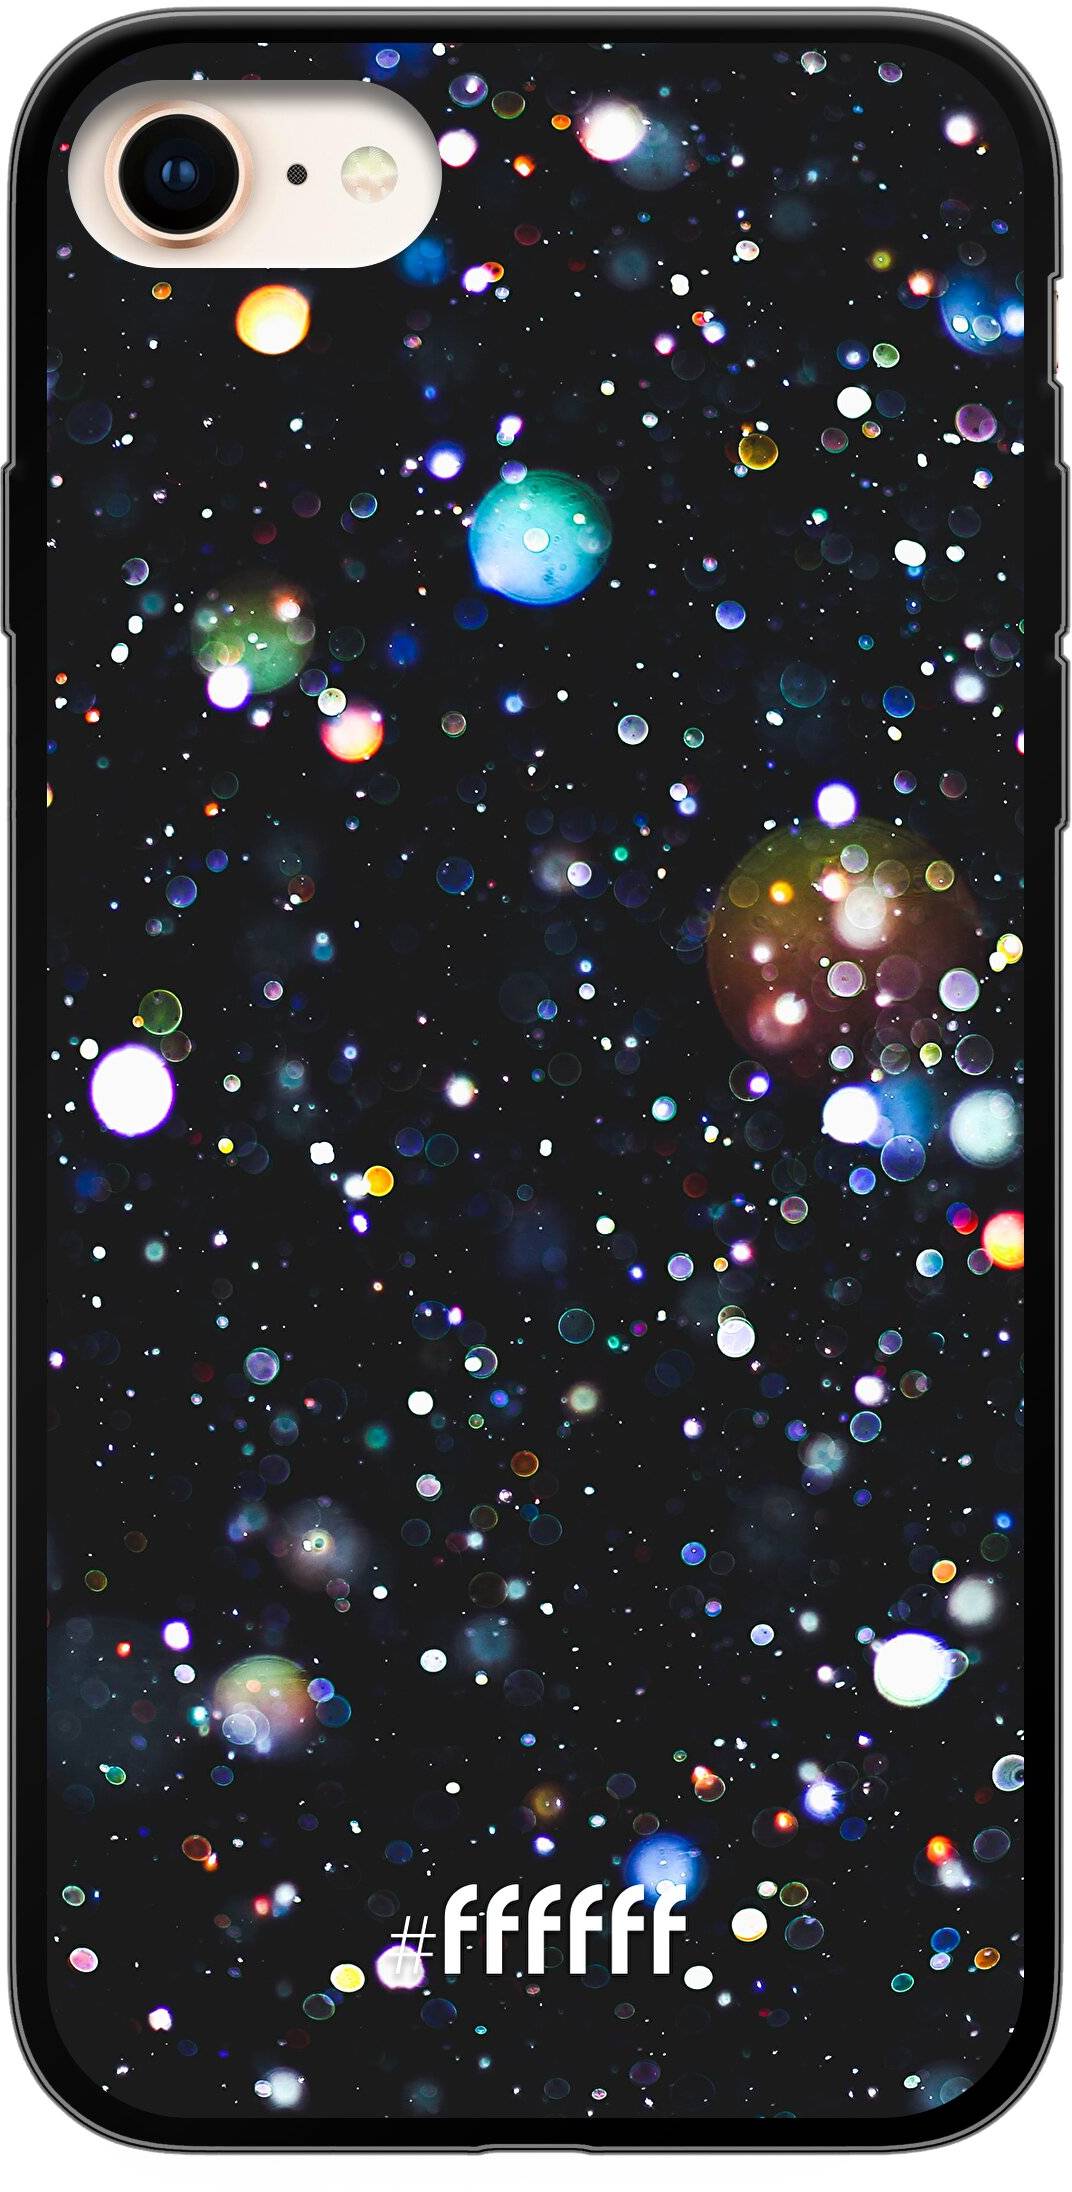 Galactic Bokeh iPhone 7